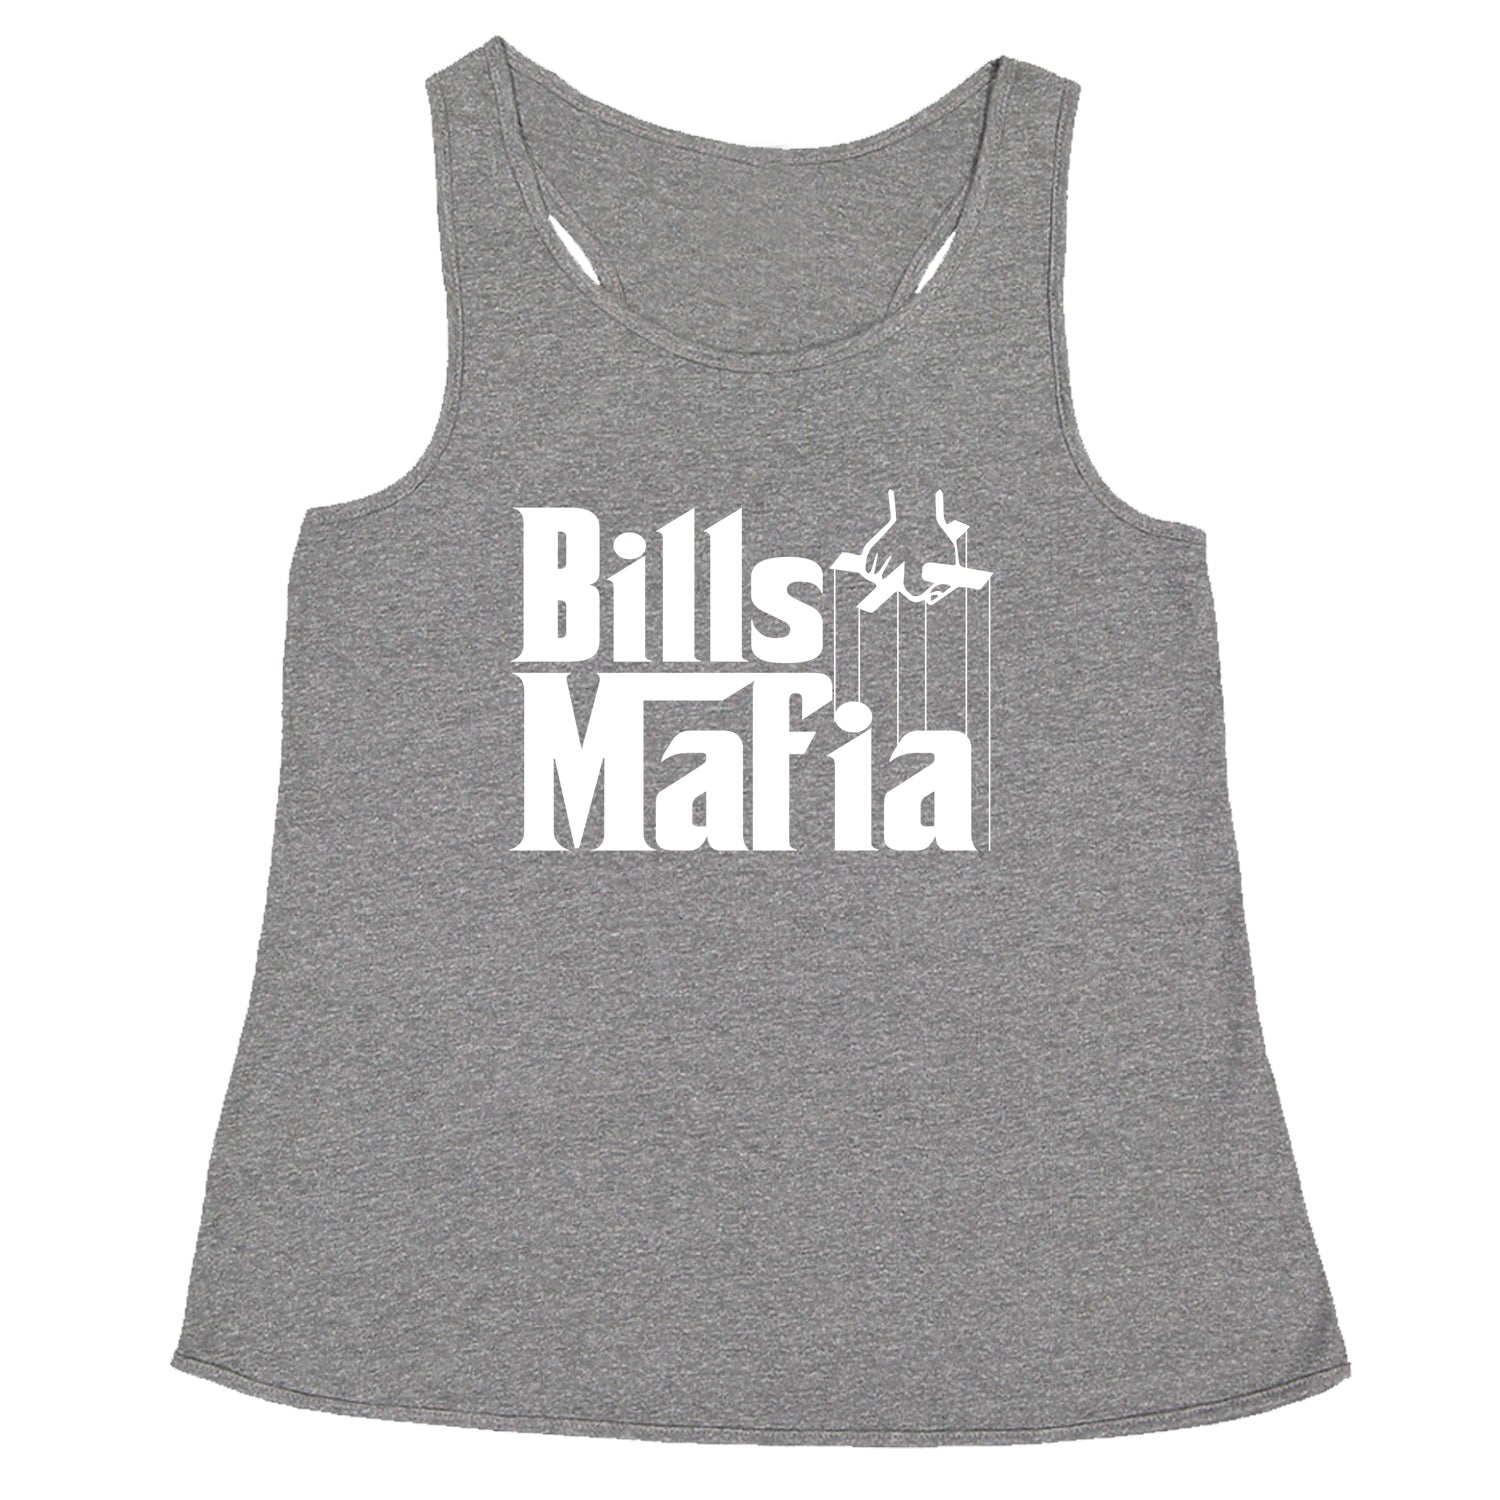 Mafia Bills Mafia Godfather Racerback Tank Top for Women bills, fan, father, football, god, godfather, new, sports, team, york by Expression Tees